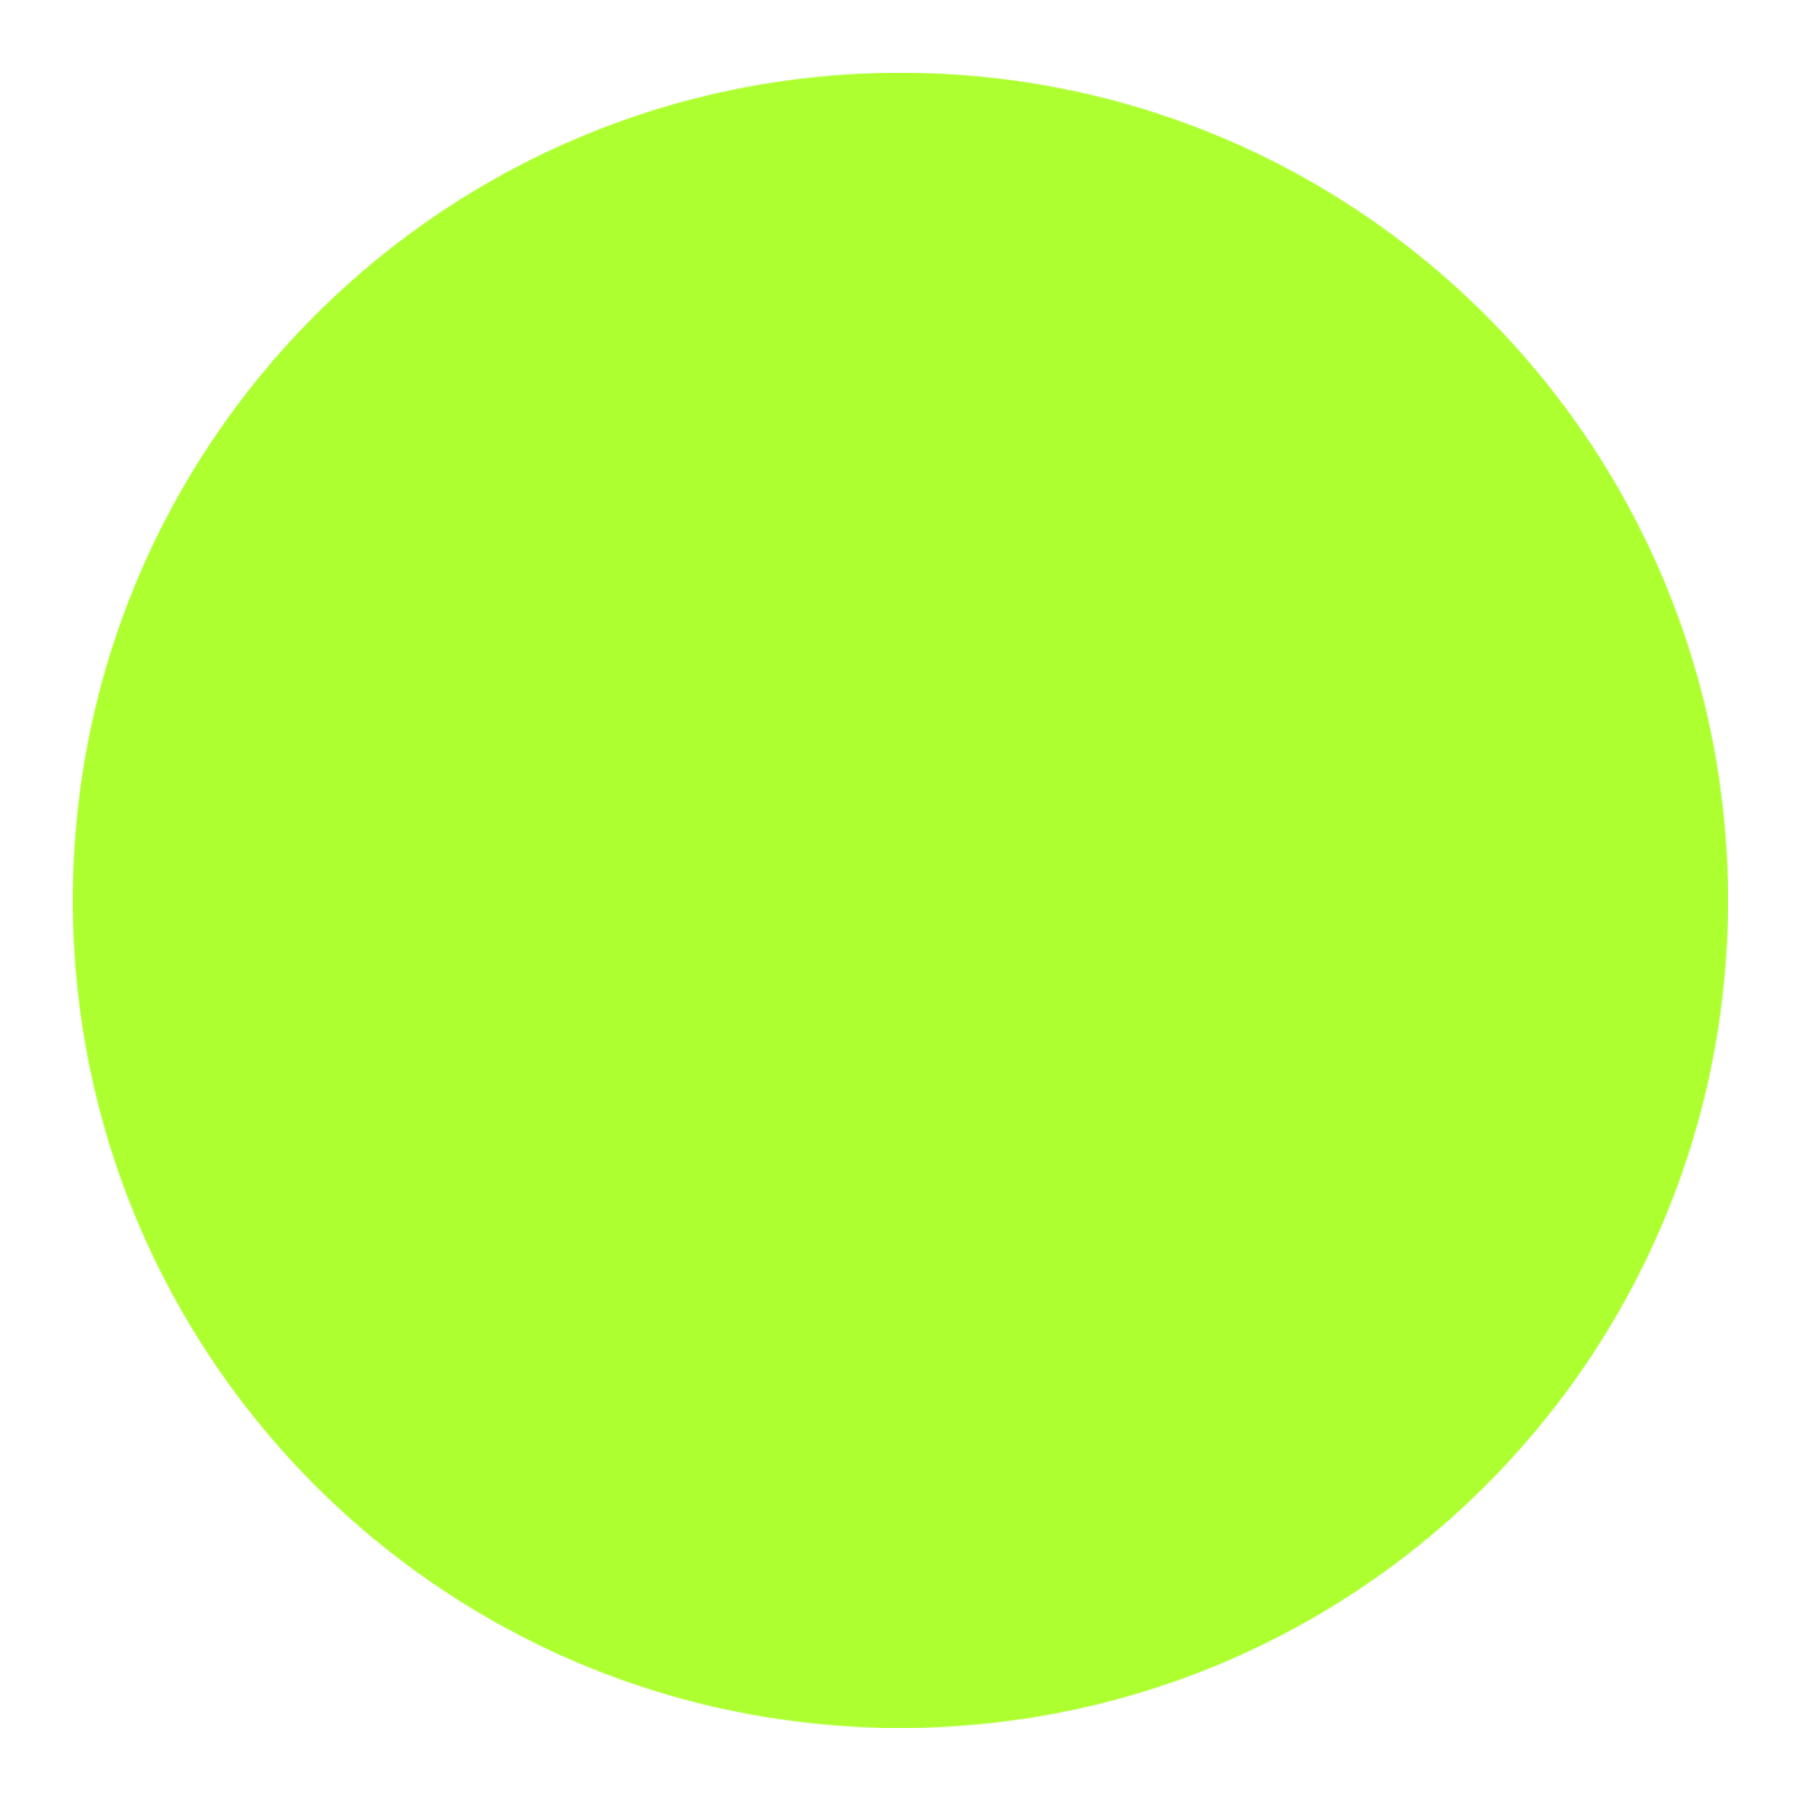 attribute-color-ADFF2F-green-yellow